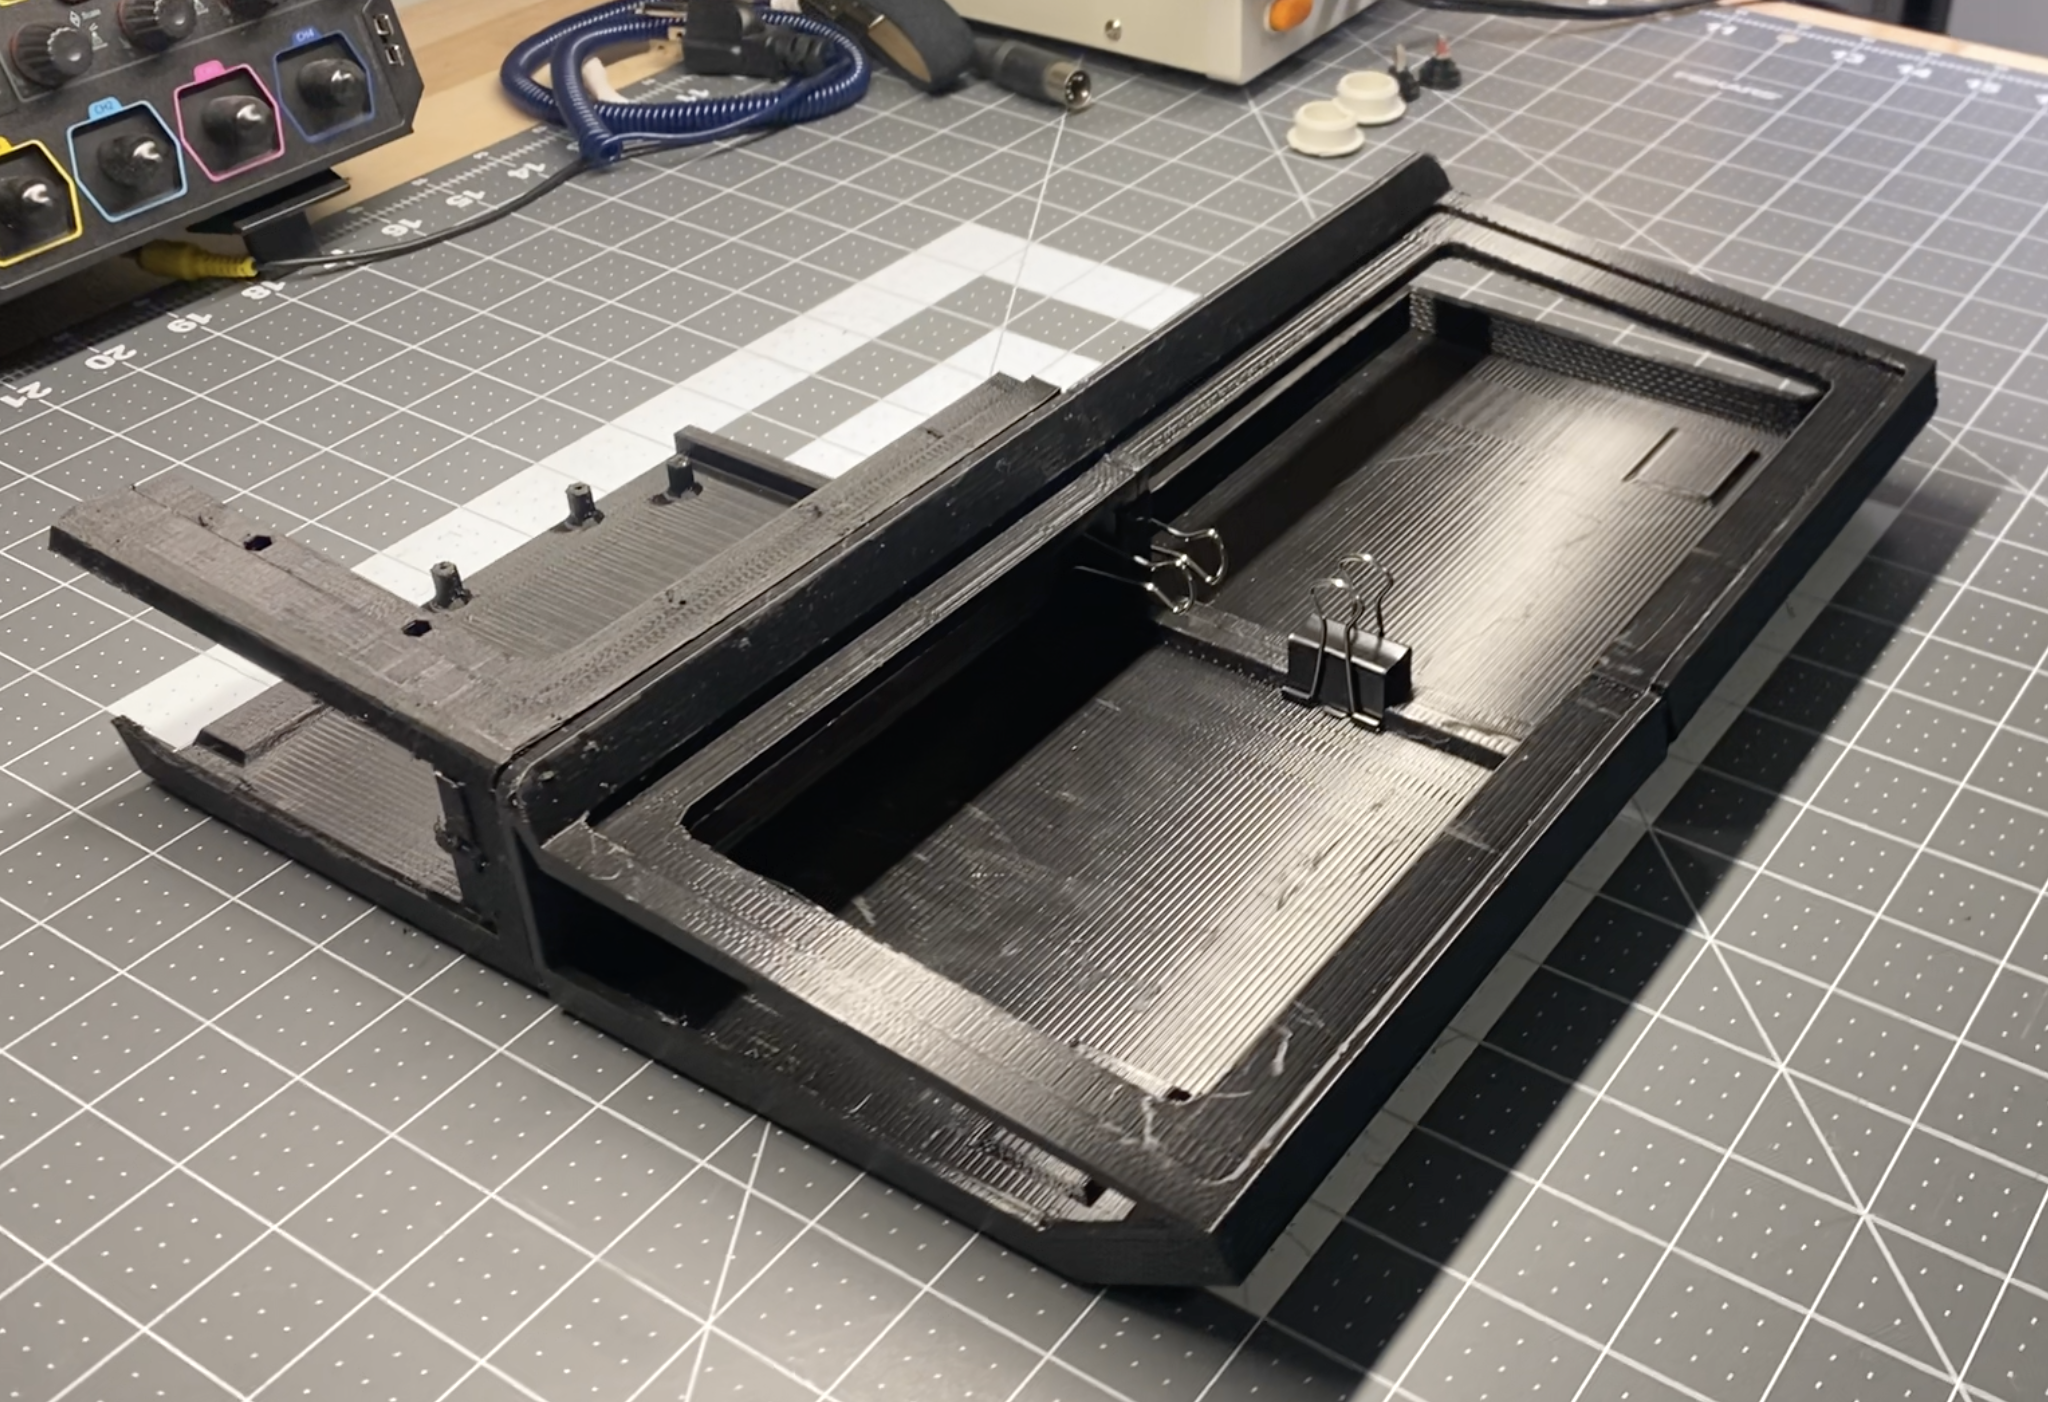 ZX81/TIMEX-SINCLAIR 1000 3D Printed Case - Part 1